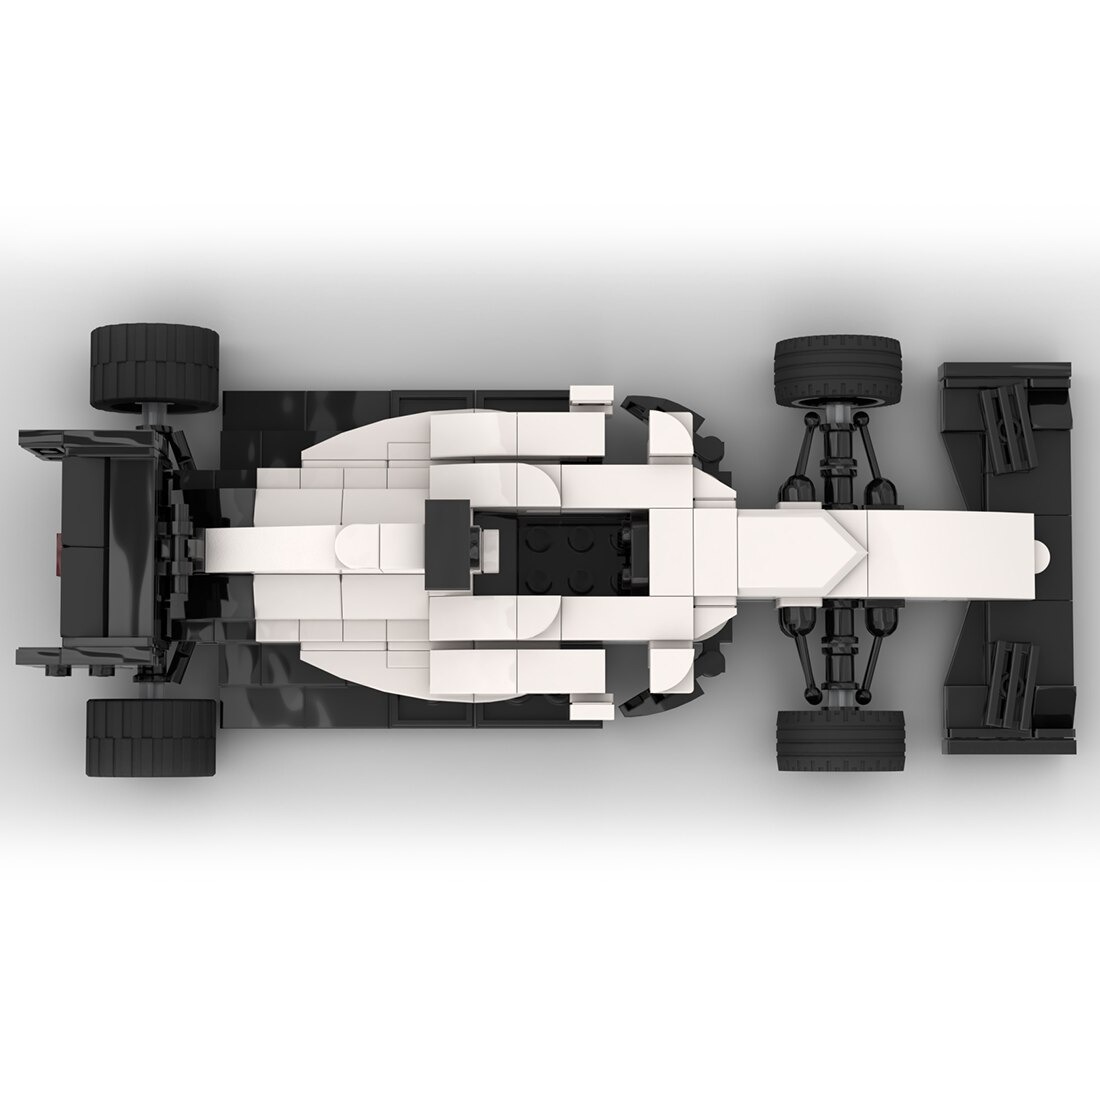 F1 Williams Fw 37 Moc 98825 2